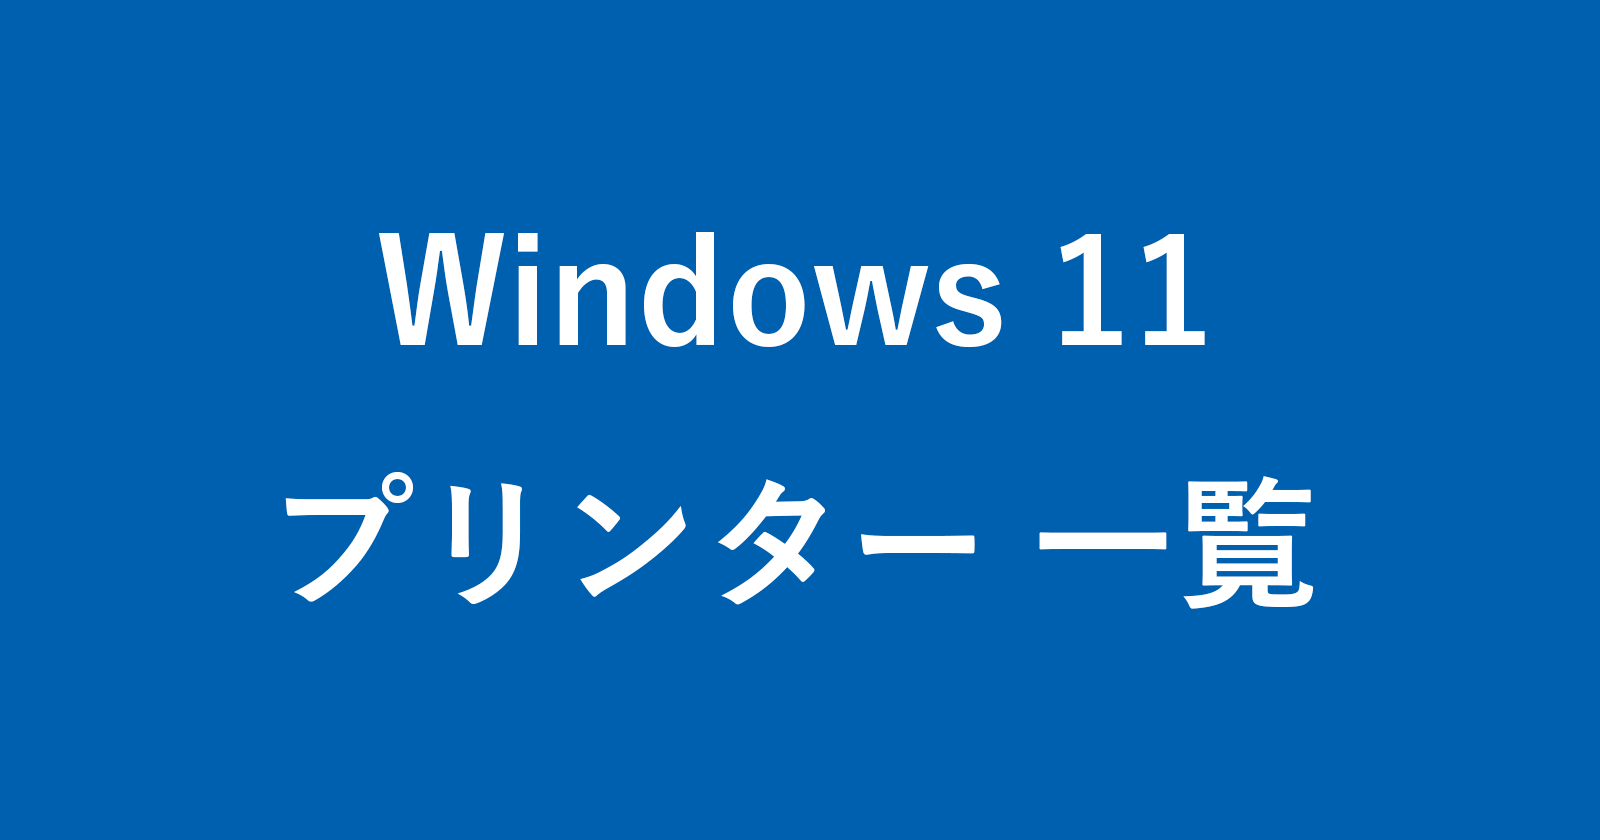 windows 11 printer list